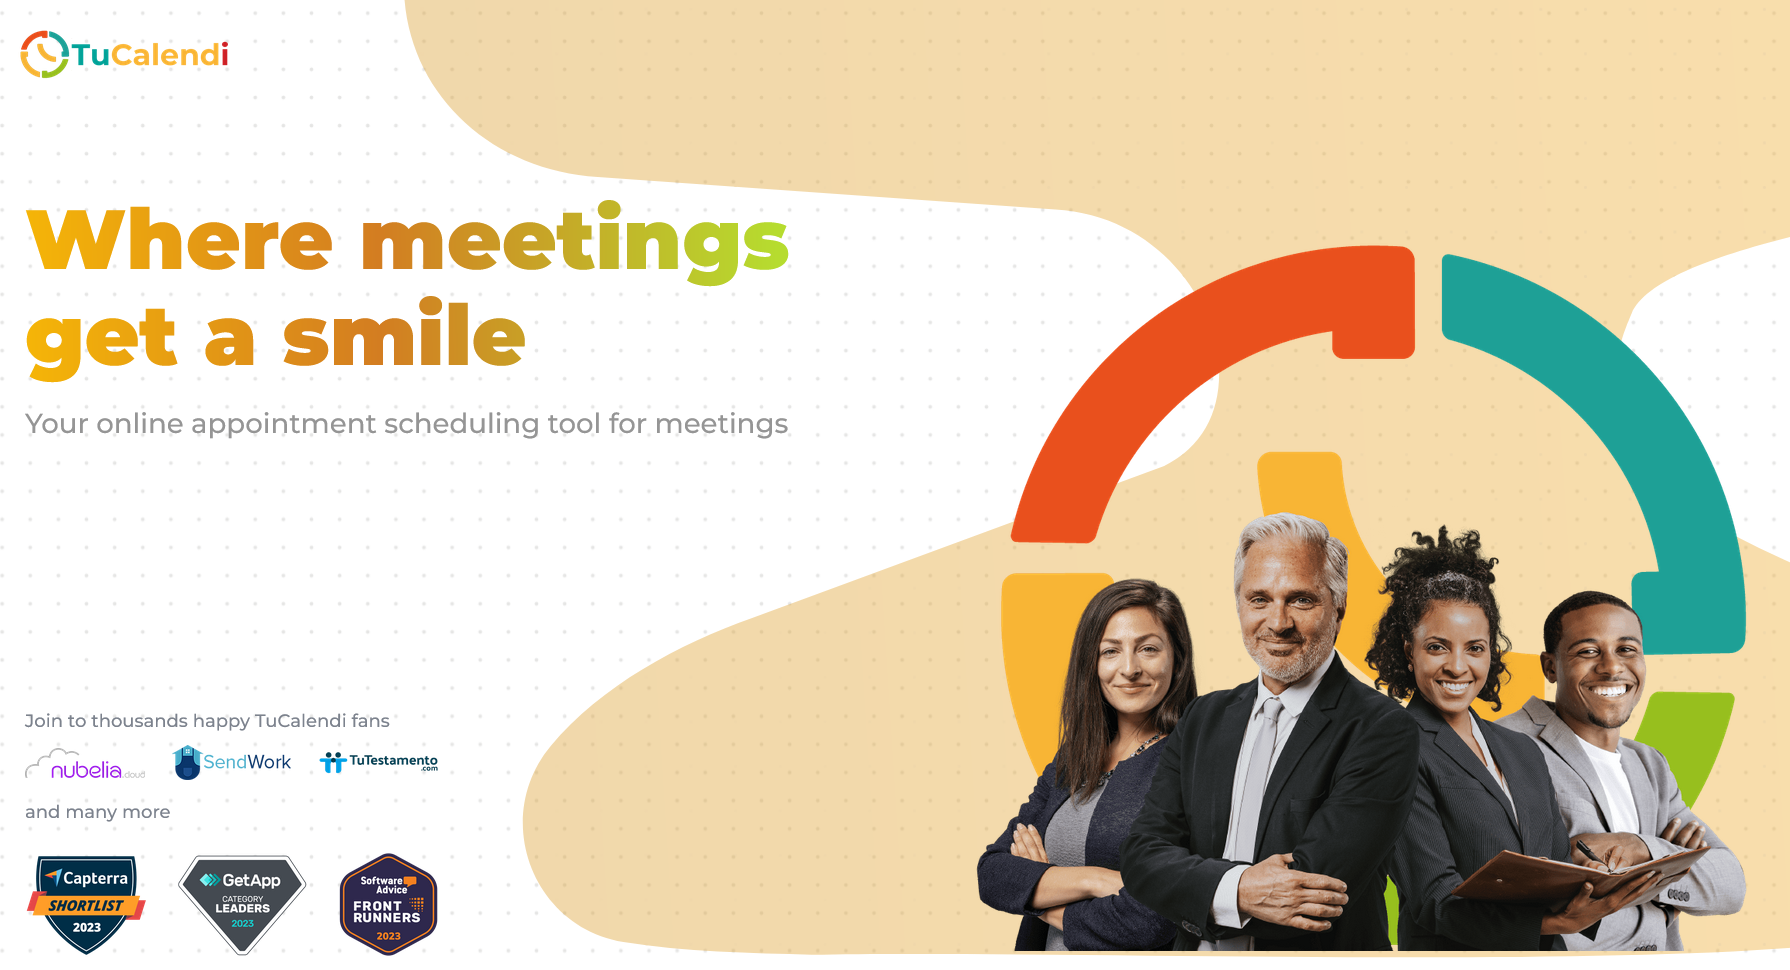 TuCalendi - Where meetings get a smile